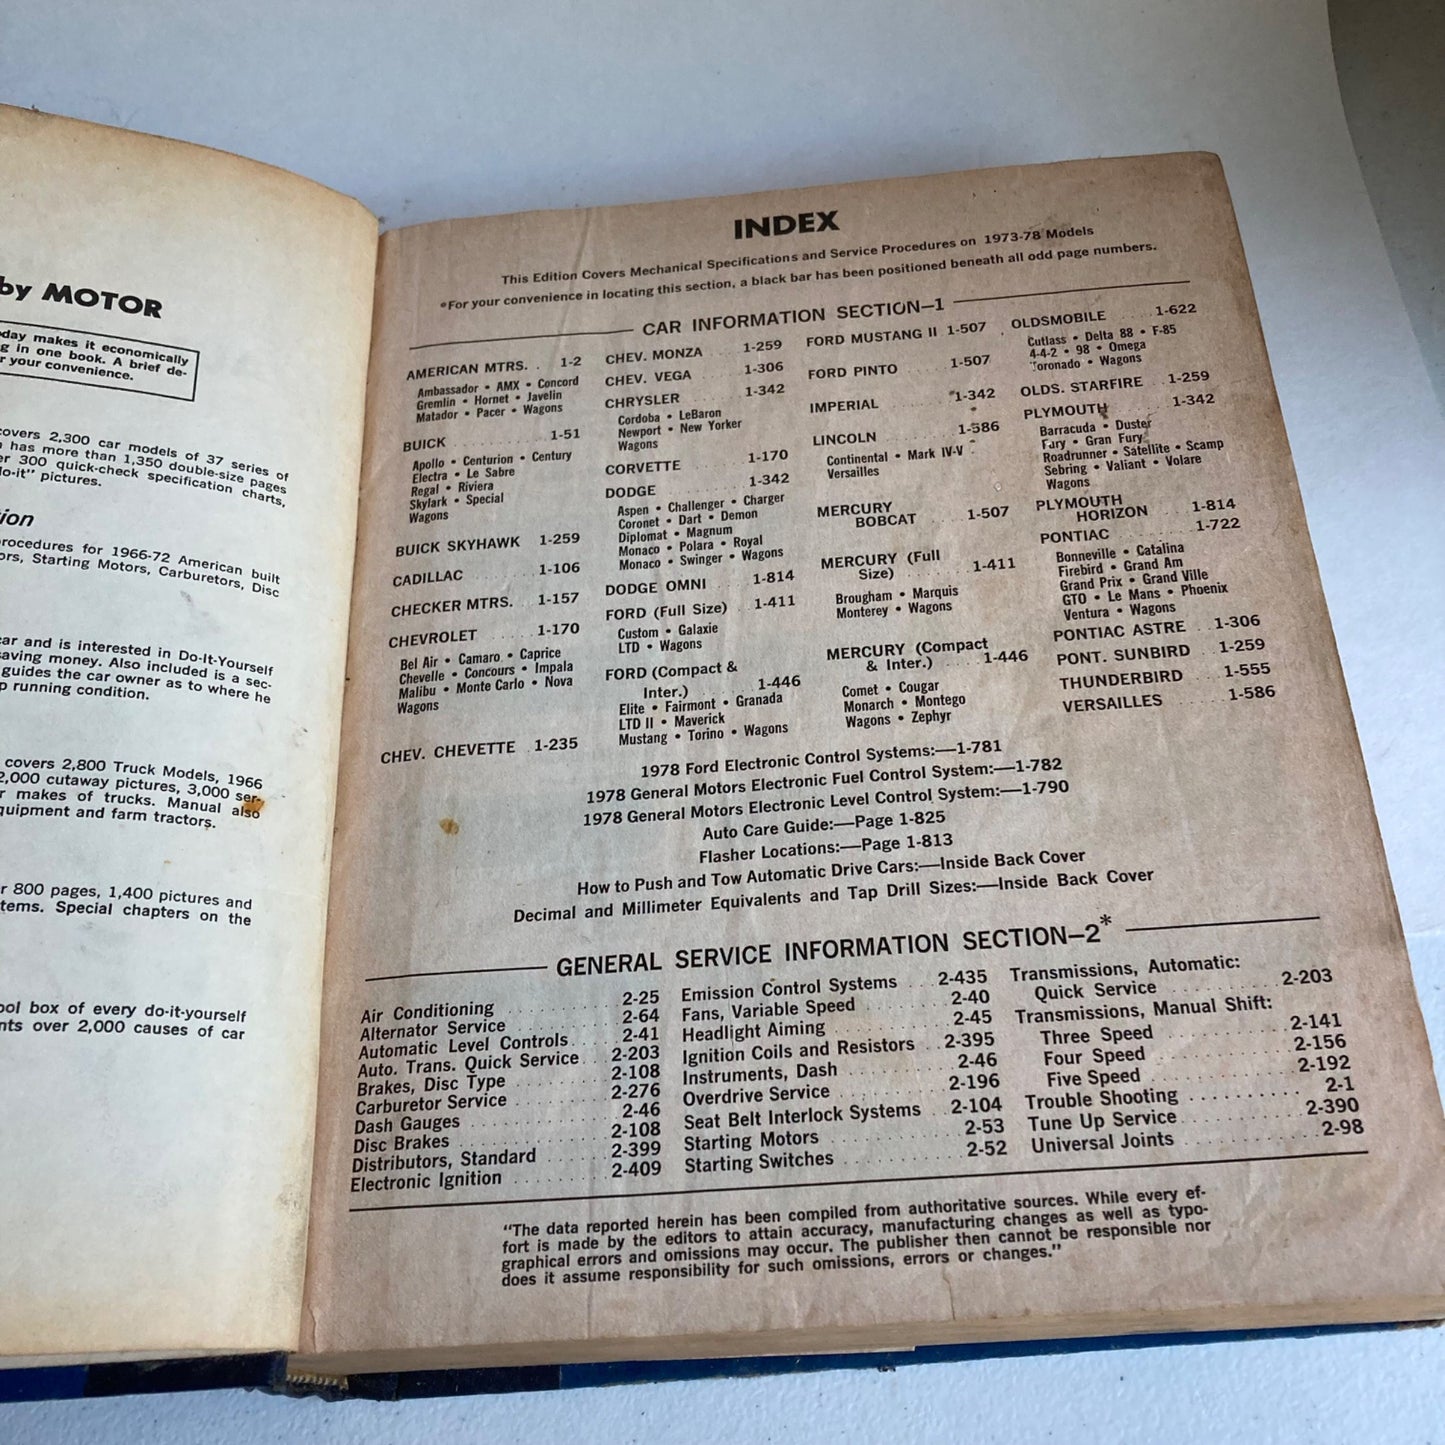 Vintage Motor Auto Repair Manual 1973-1978 Hardcover Service Manual Book